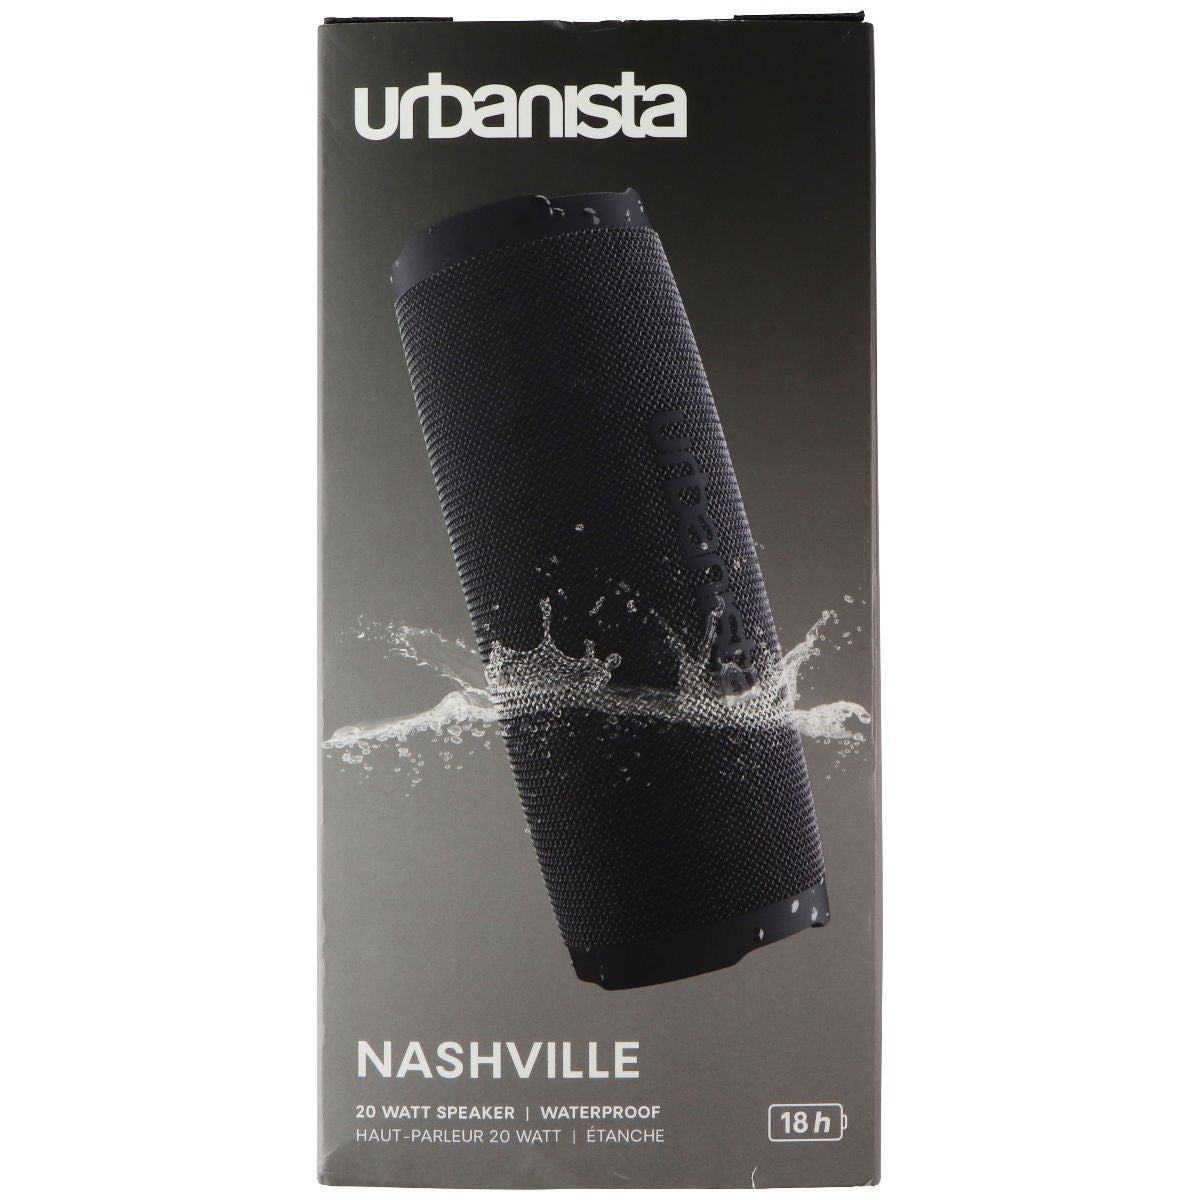 Urbanista Nashville Waterproof IPX7 Wireless Bluetooth Speaker - Black Cell Phone - Audio Docks & Speakers Urbanista    - Simple Cell Bulk Wholesale Pricing - USA Seller